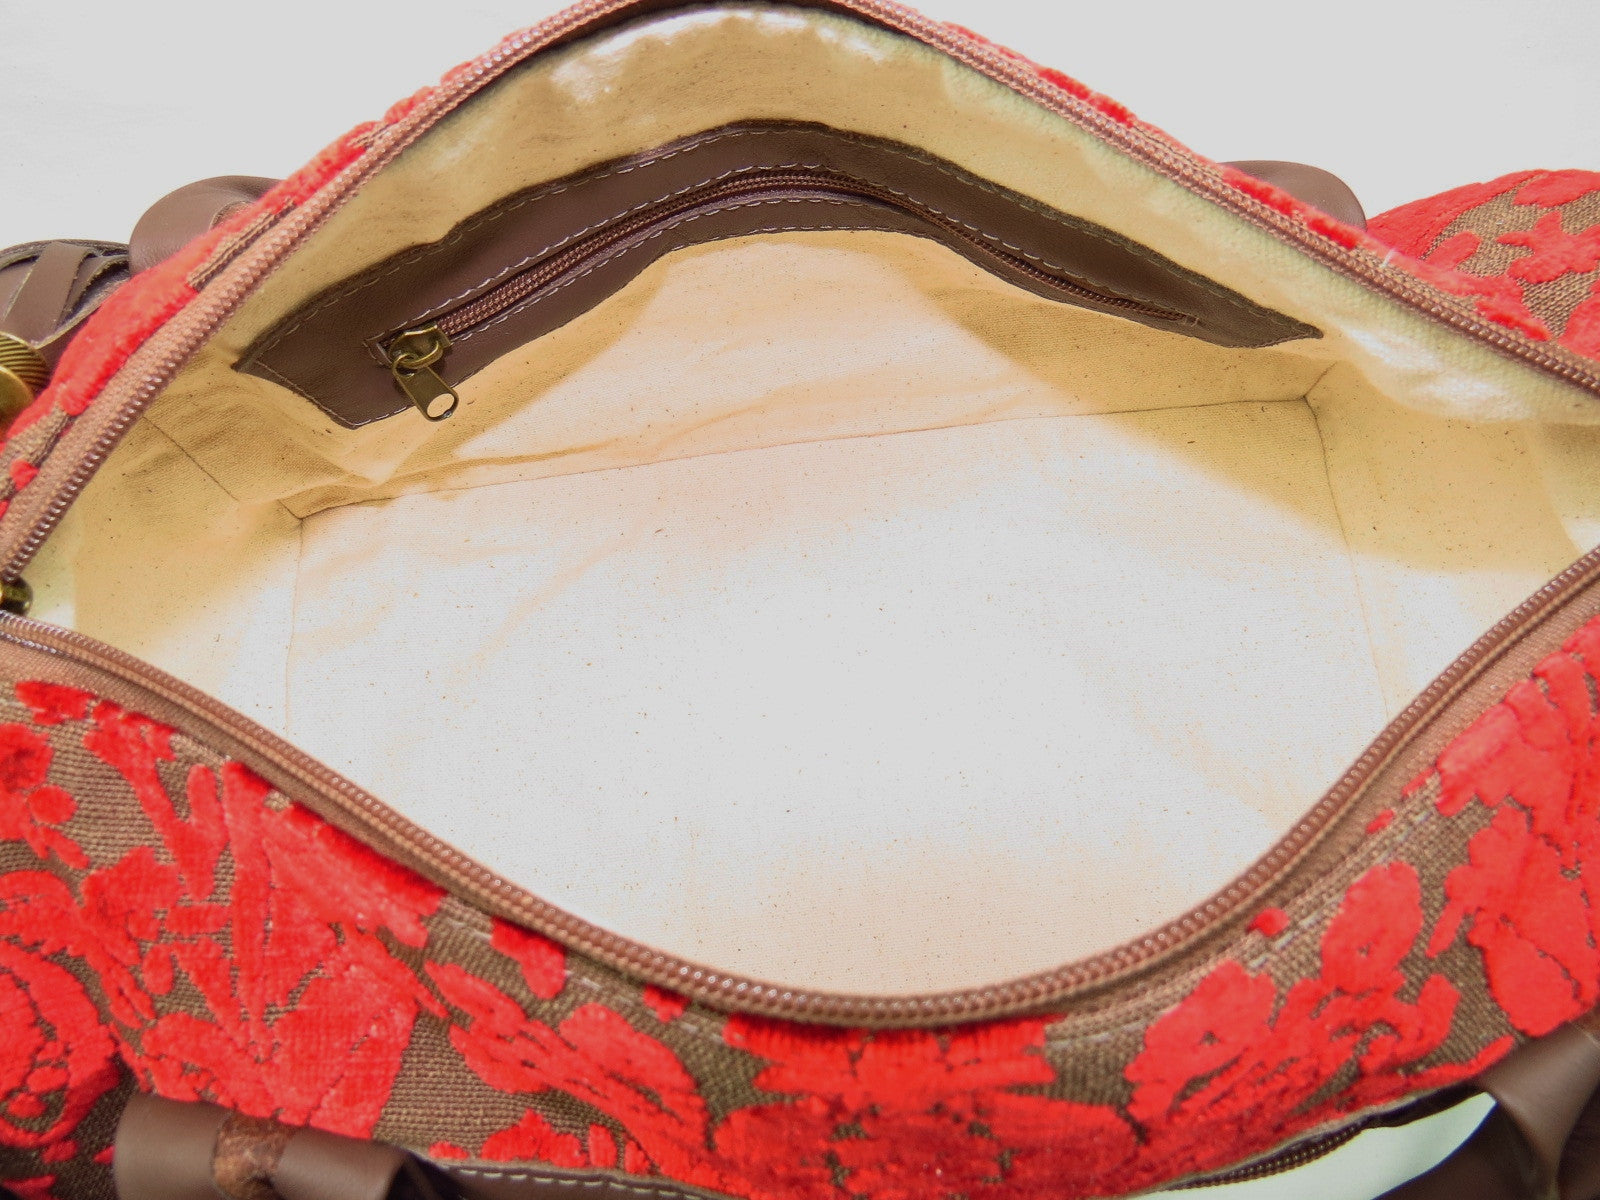 Brown Leather and Red Cut Velvet Satchel interior zipper pocket